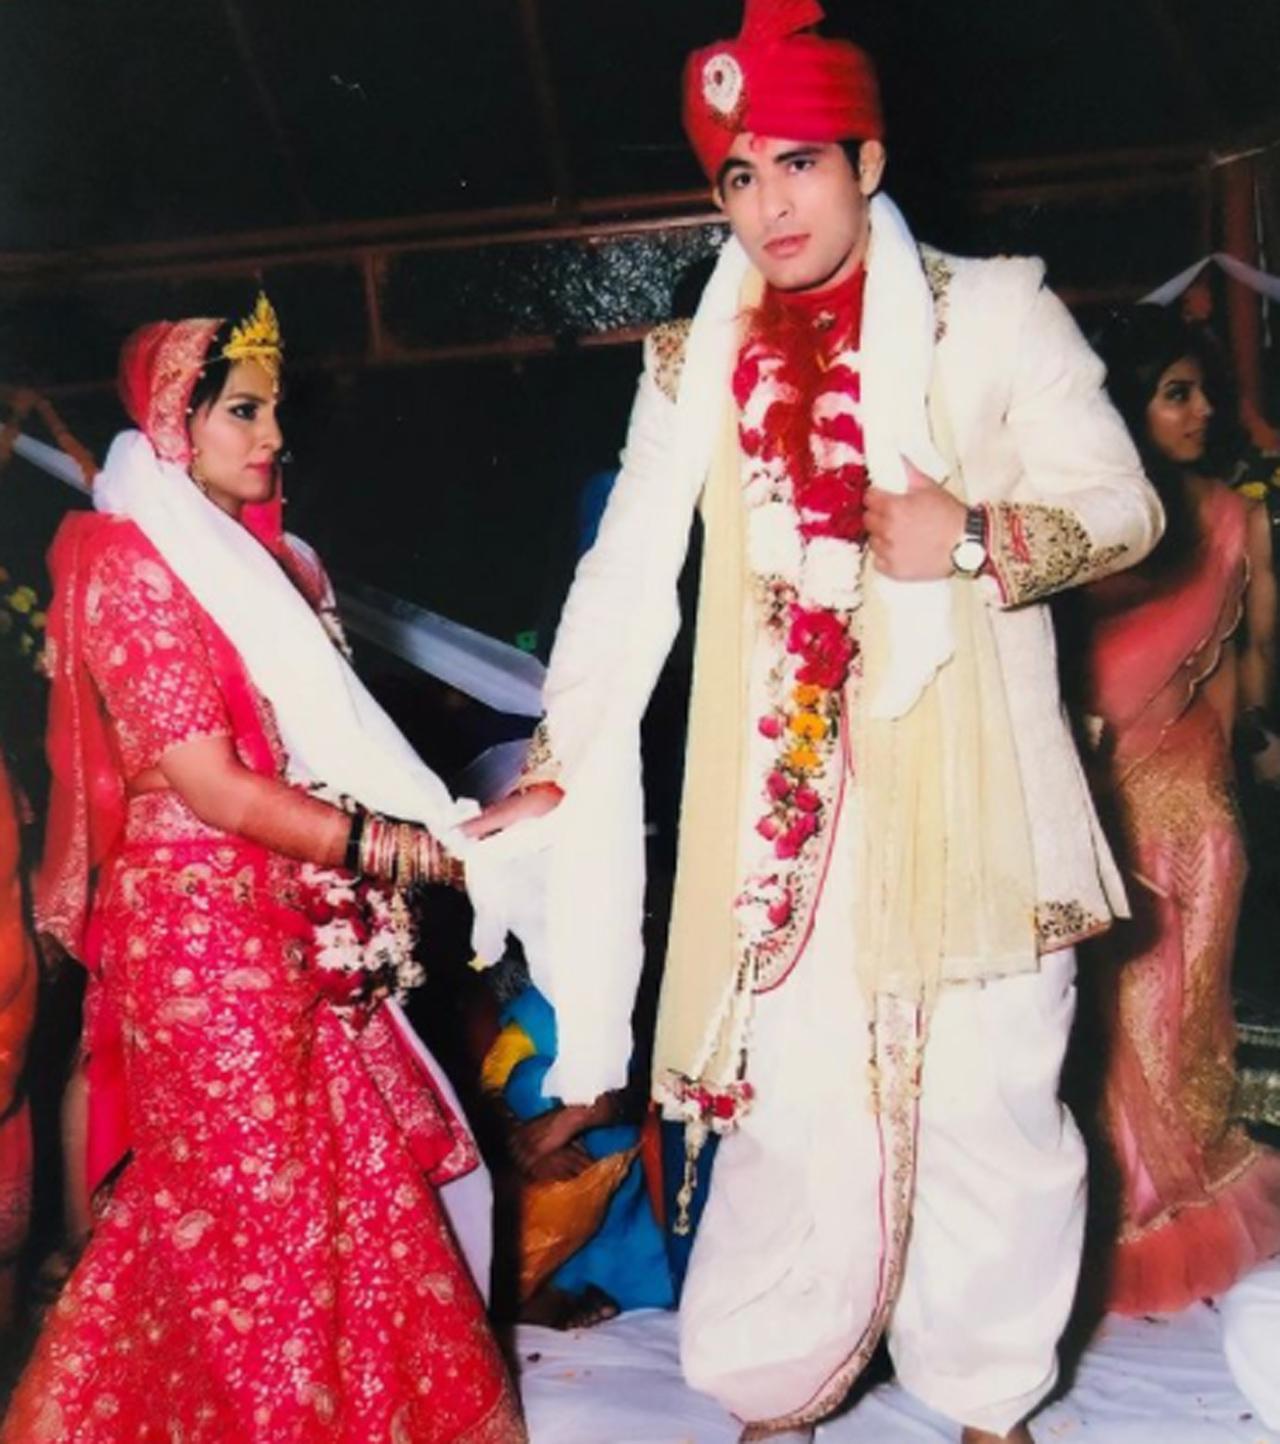 Geeta Phogat married fellow wrestler Pawan Kumar Saroha on November 20, 2016.